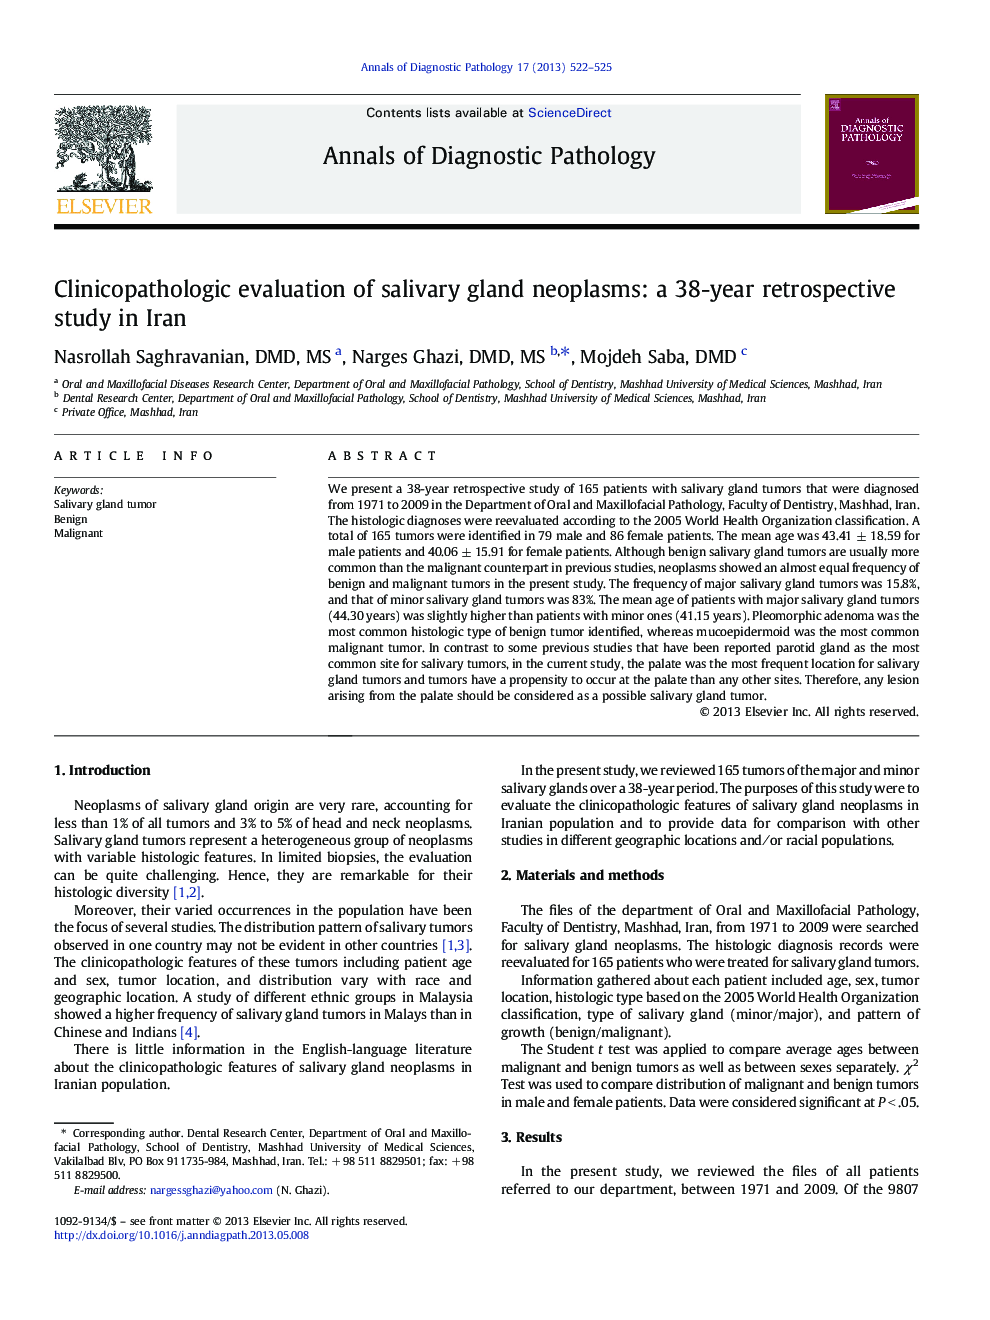 Clinicopathologic evaluation of salivary gland neoplasms: a 38-year retrospective study in Iran